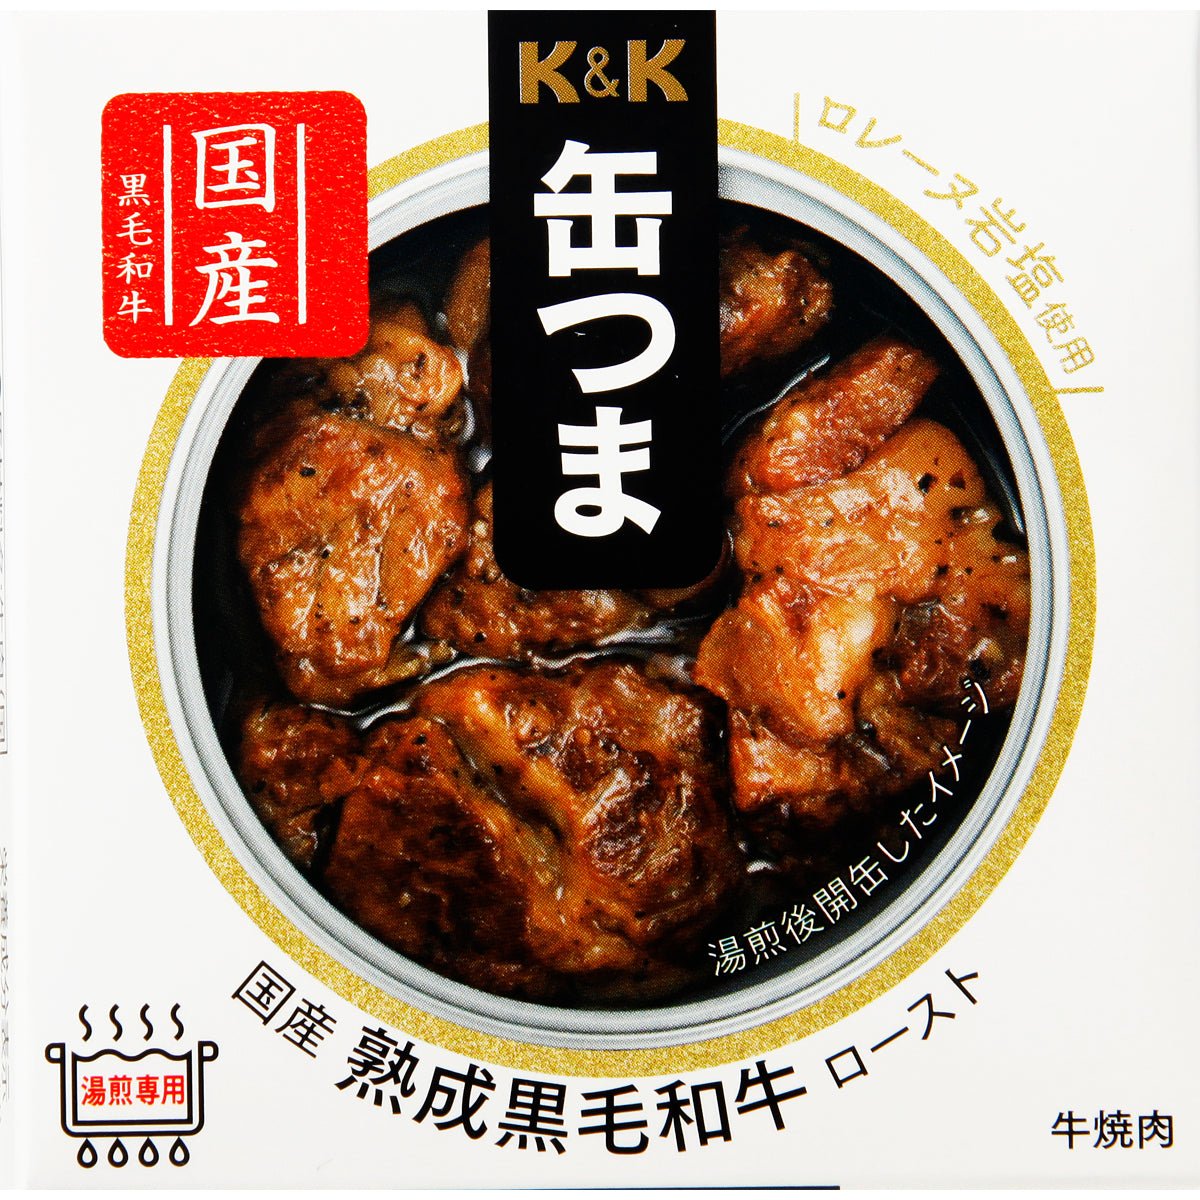 K & K Koqua 국내 노인 노인 Kuroge wagyu 쇠고기 로스트